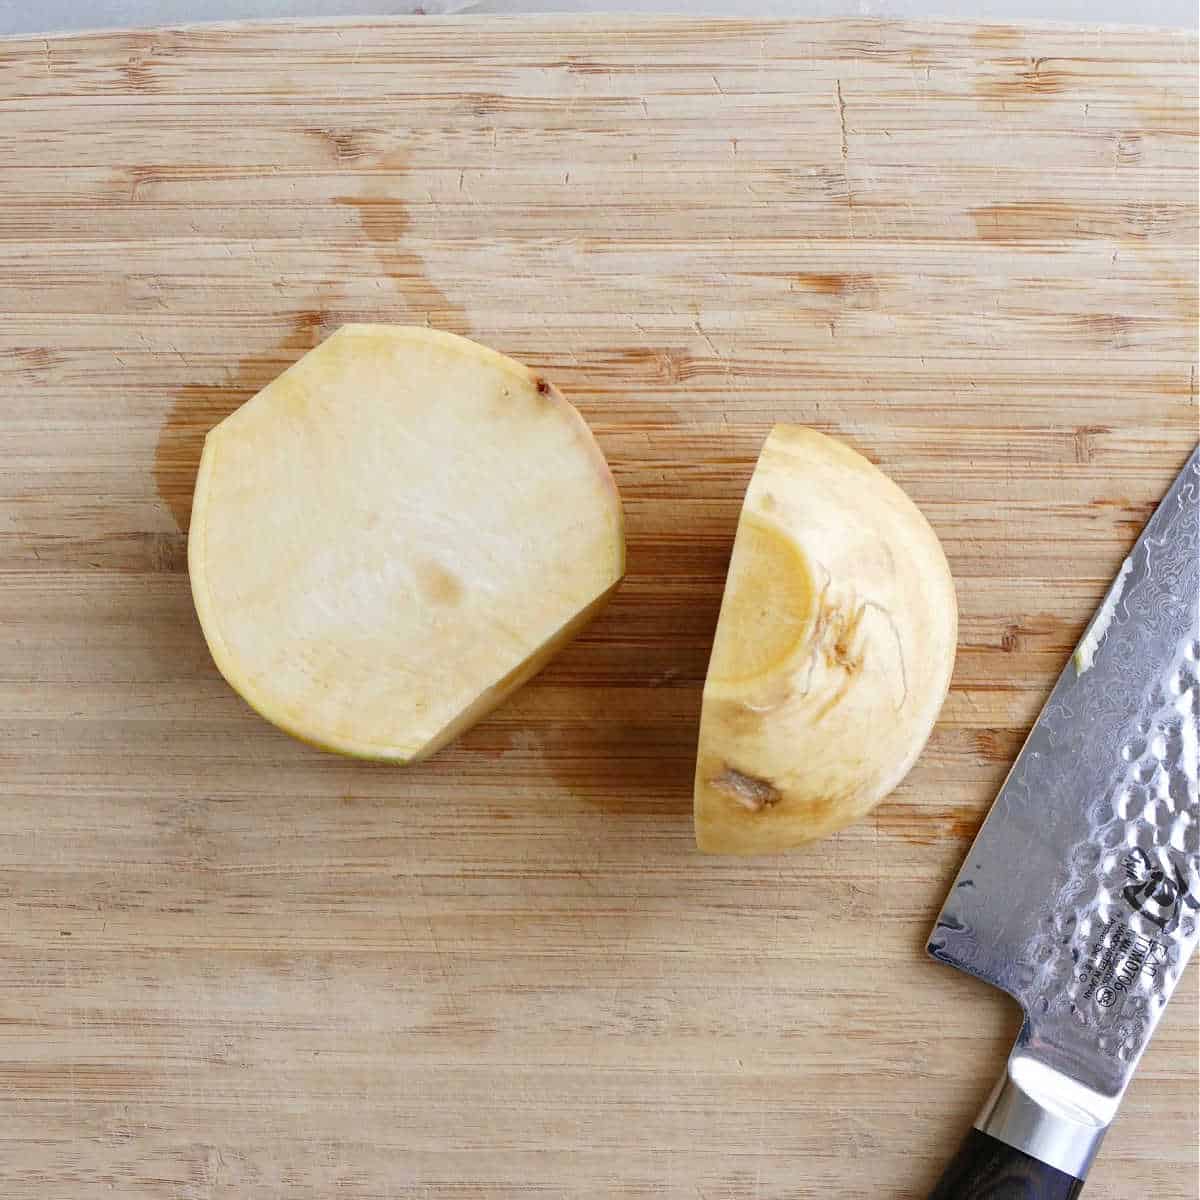 rutabaga cut in half with a knife on a bamboo cutting board